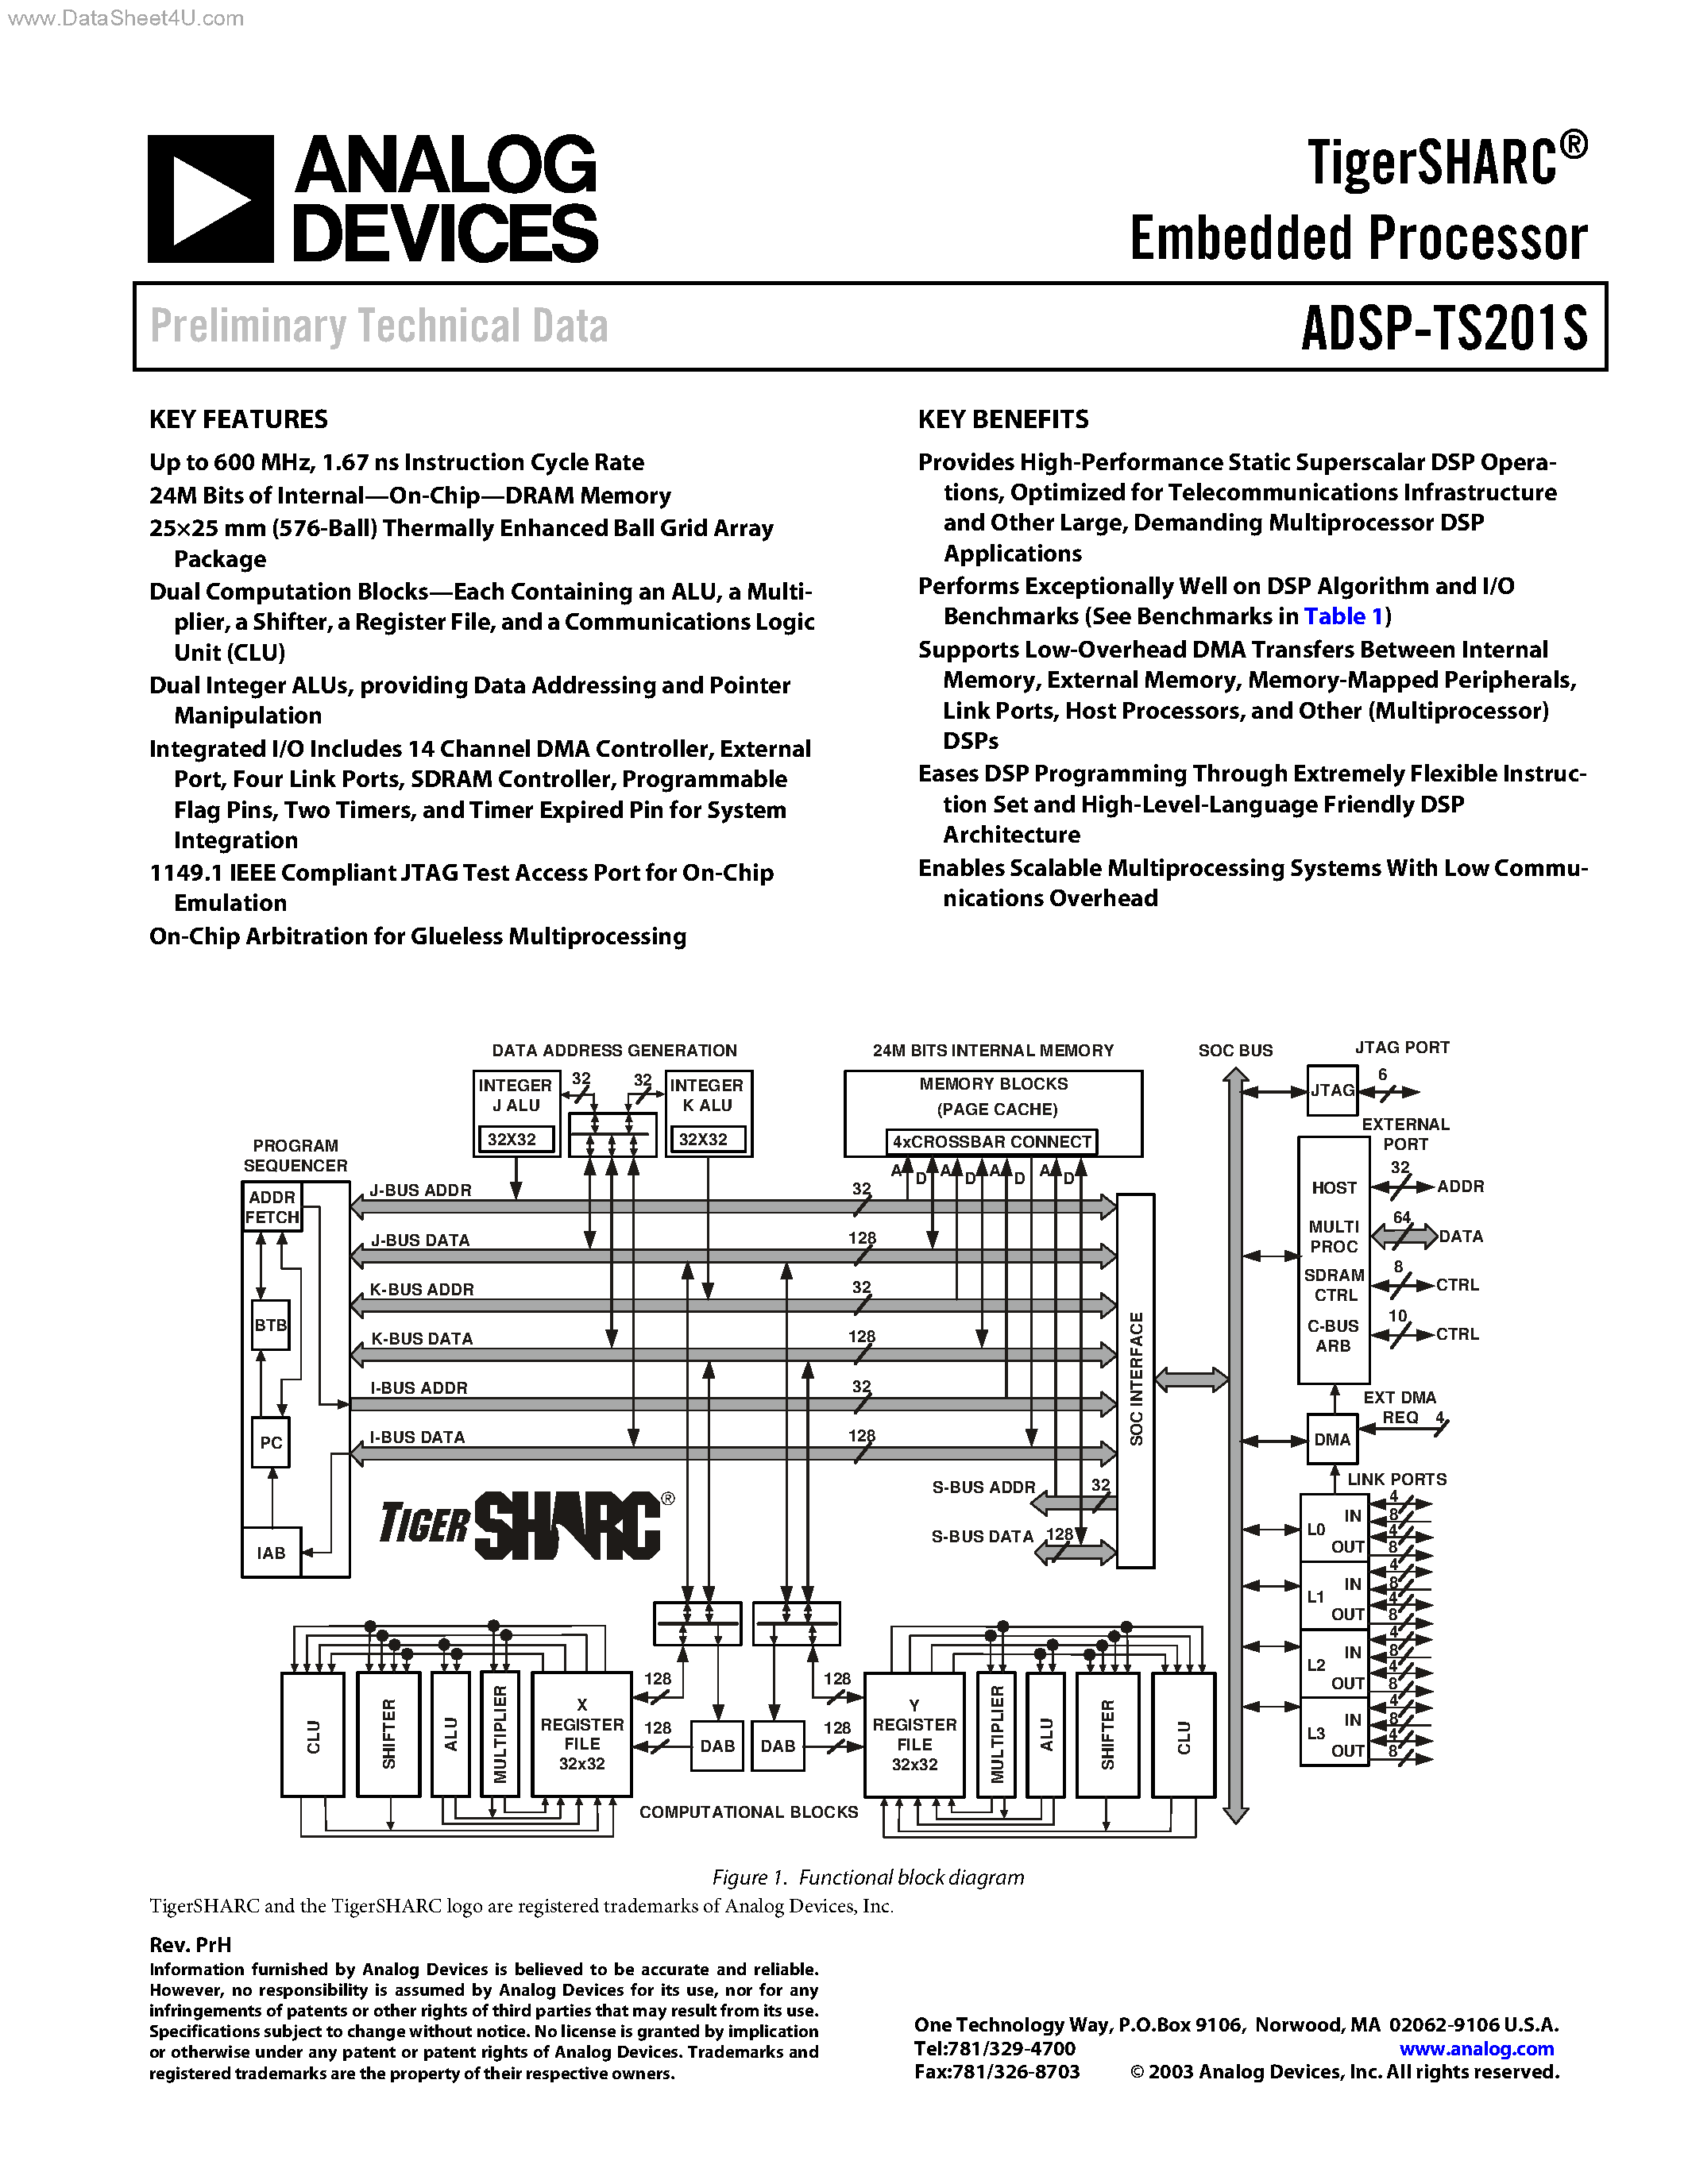 Даташит ADSP-TS201S - TigerSHARC-R Embedded Processor страница 1